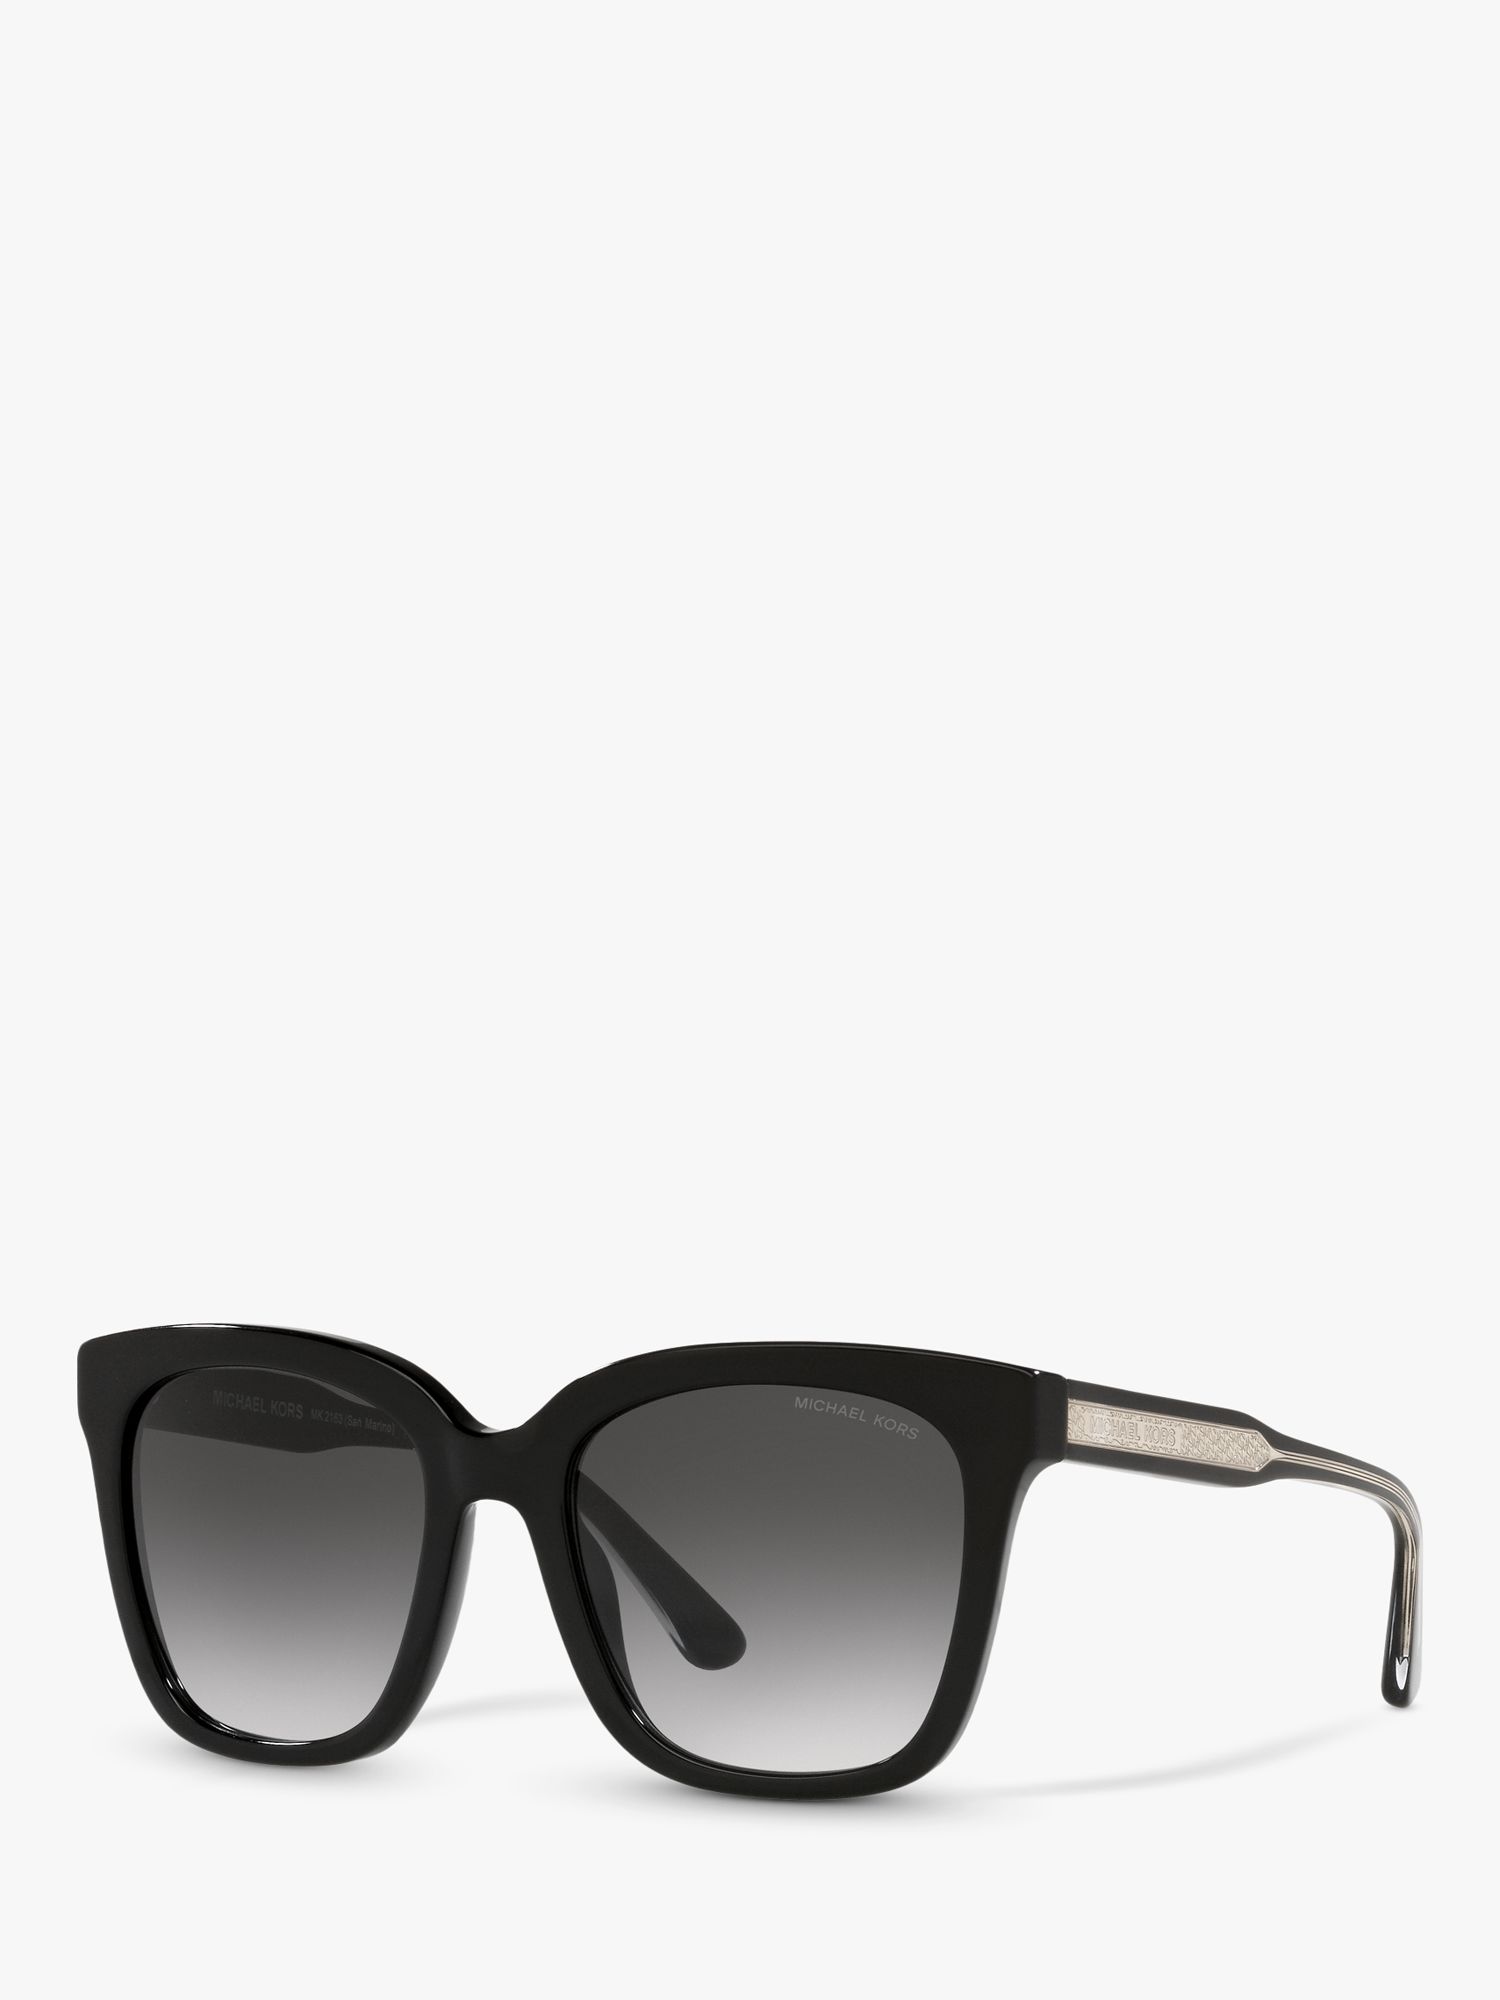 Michael Kors MK2163 Women's San Marino Square Sunglasses, Black/Grey  Gradient at John Lewis & Partners